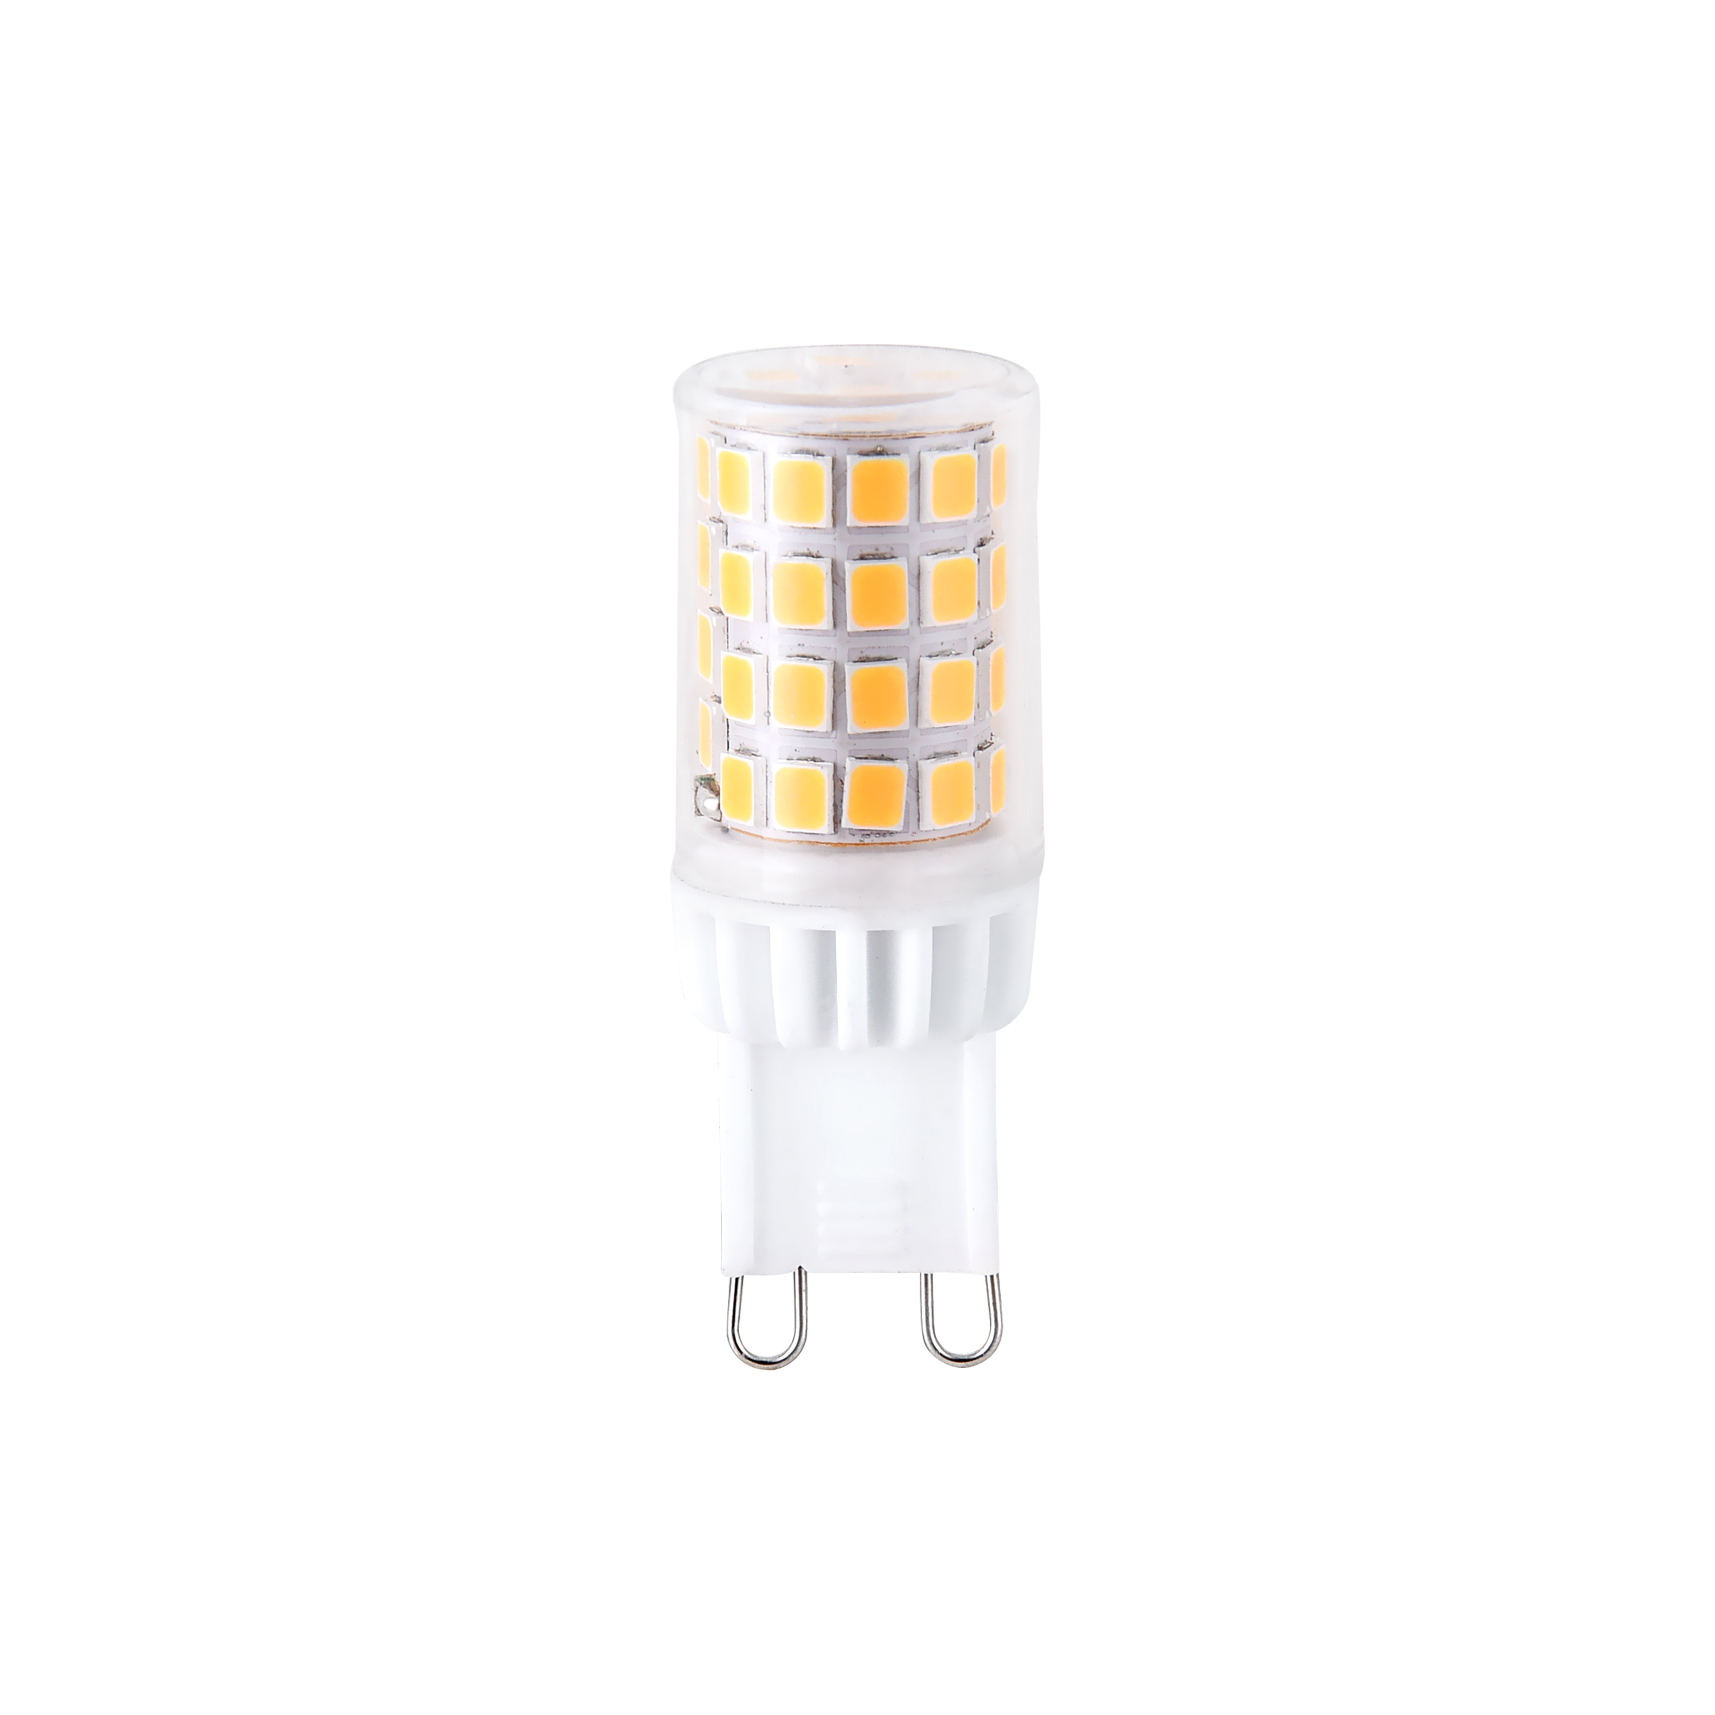 LED 4W transparent LED bulb